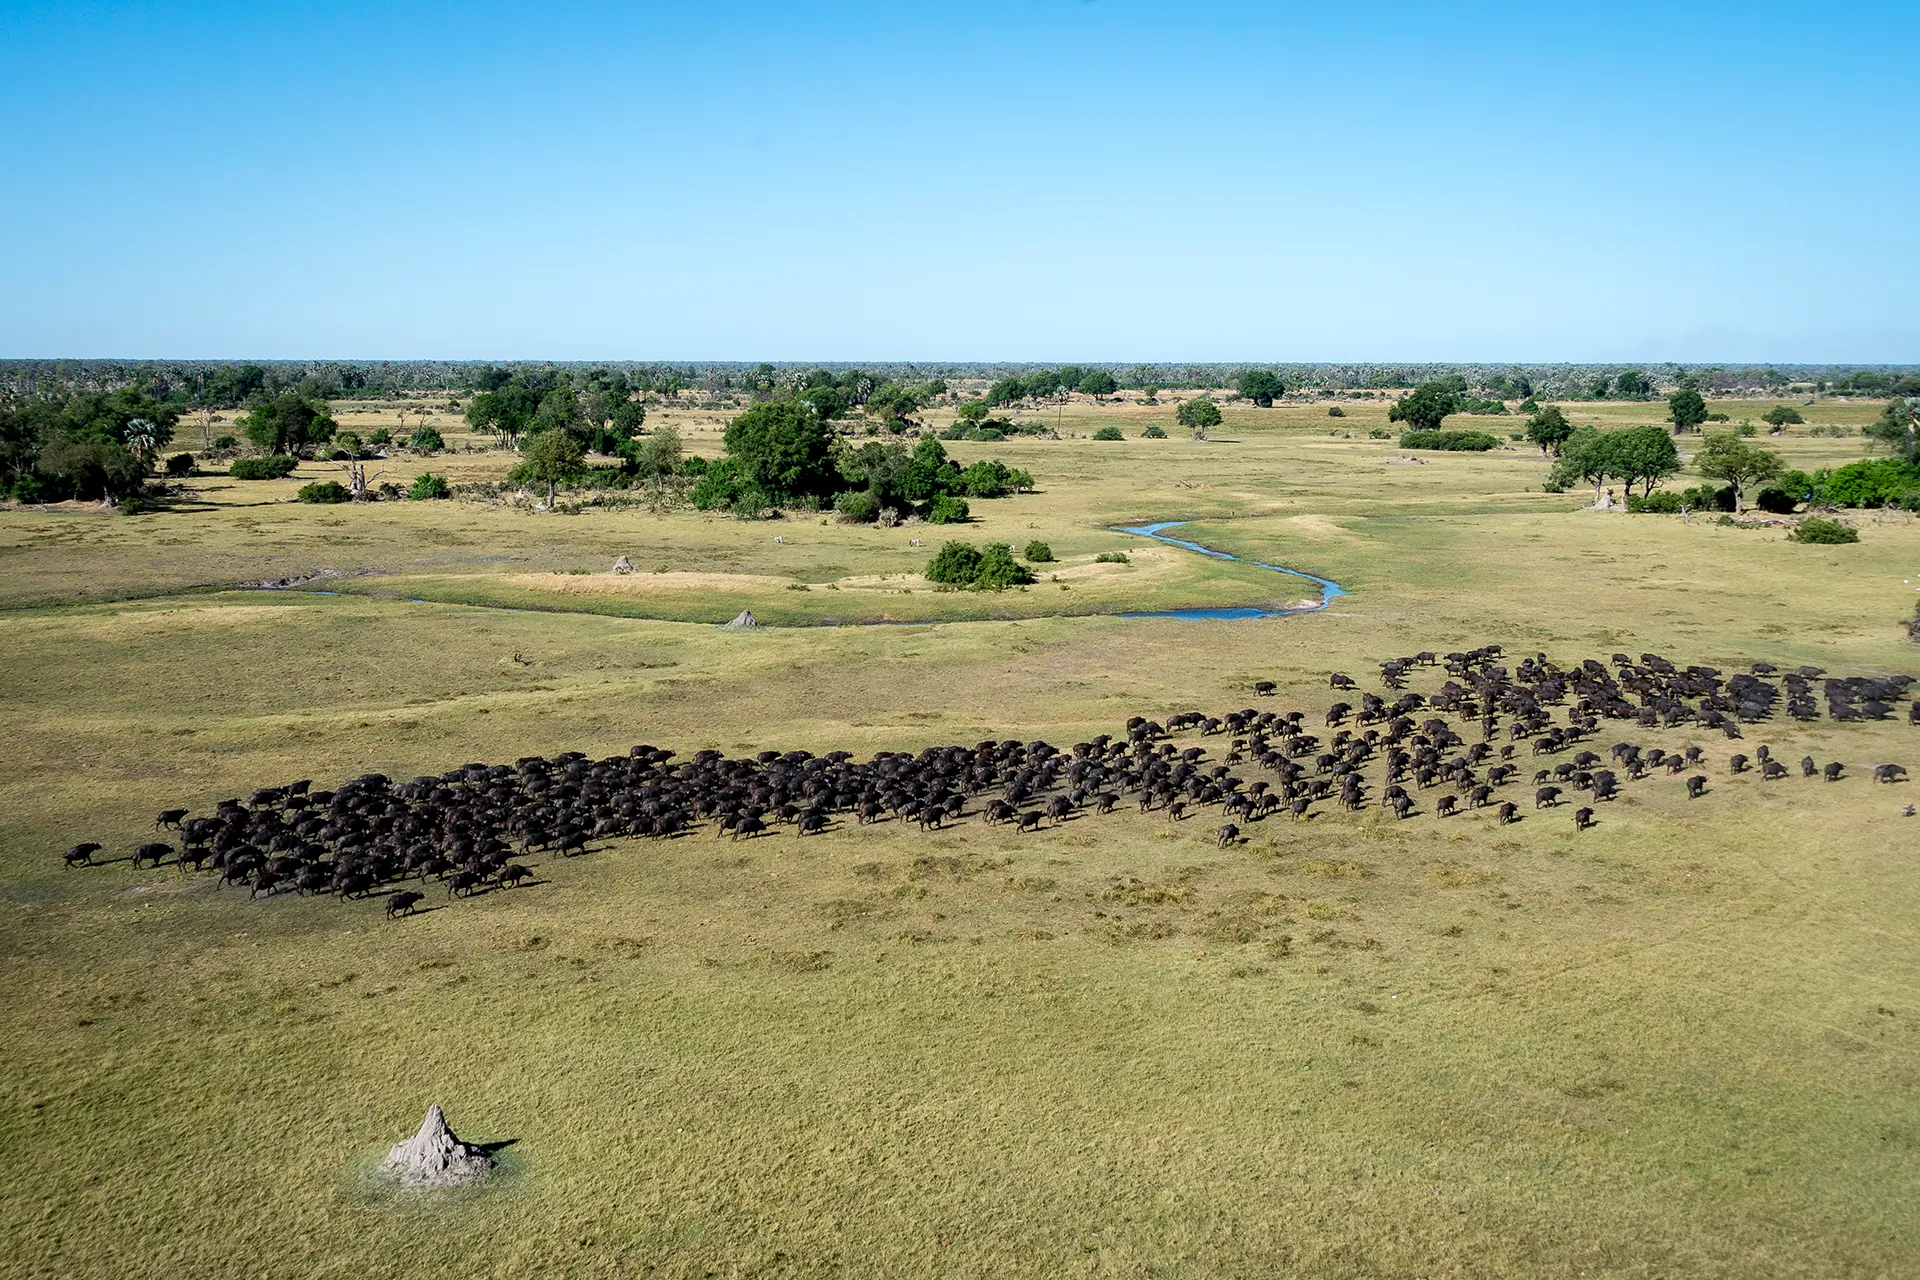 Riesige Herde Büffel aus der Luft fotografiert